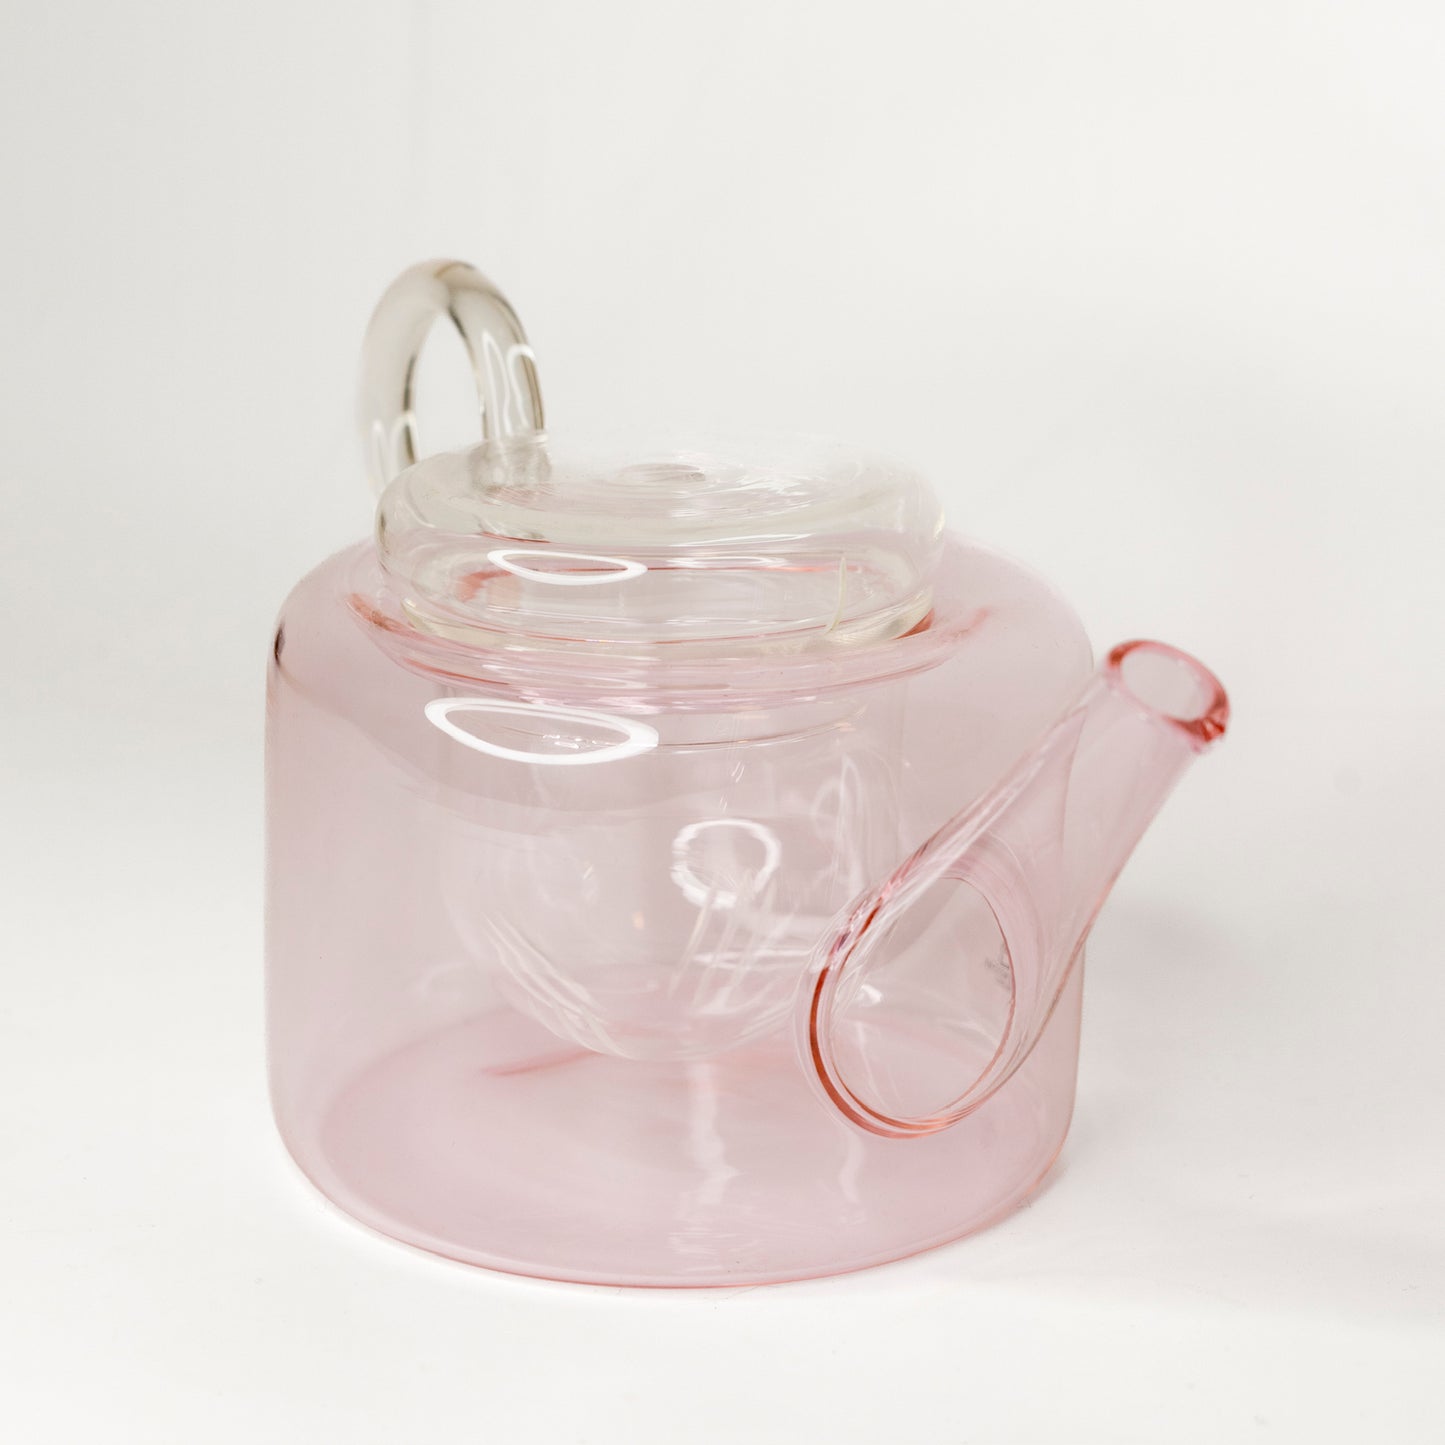 Pink glass teapot